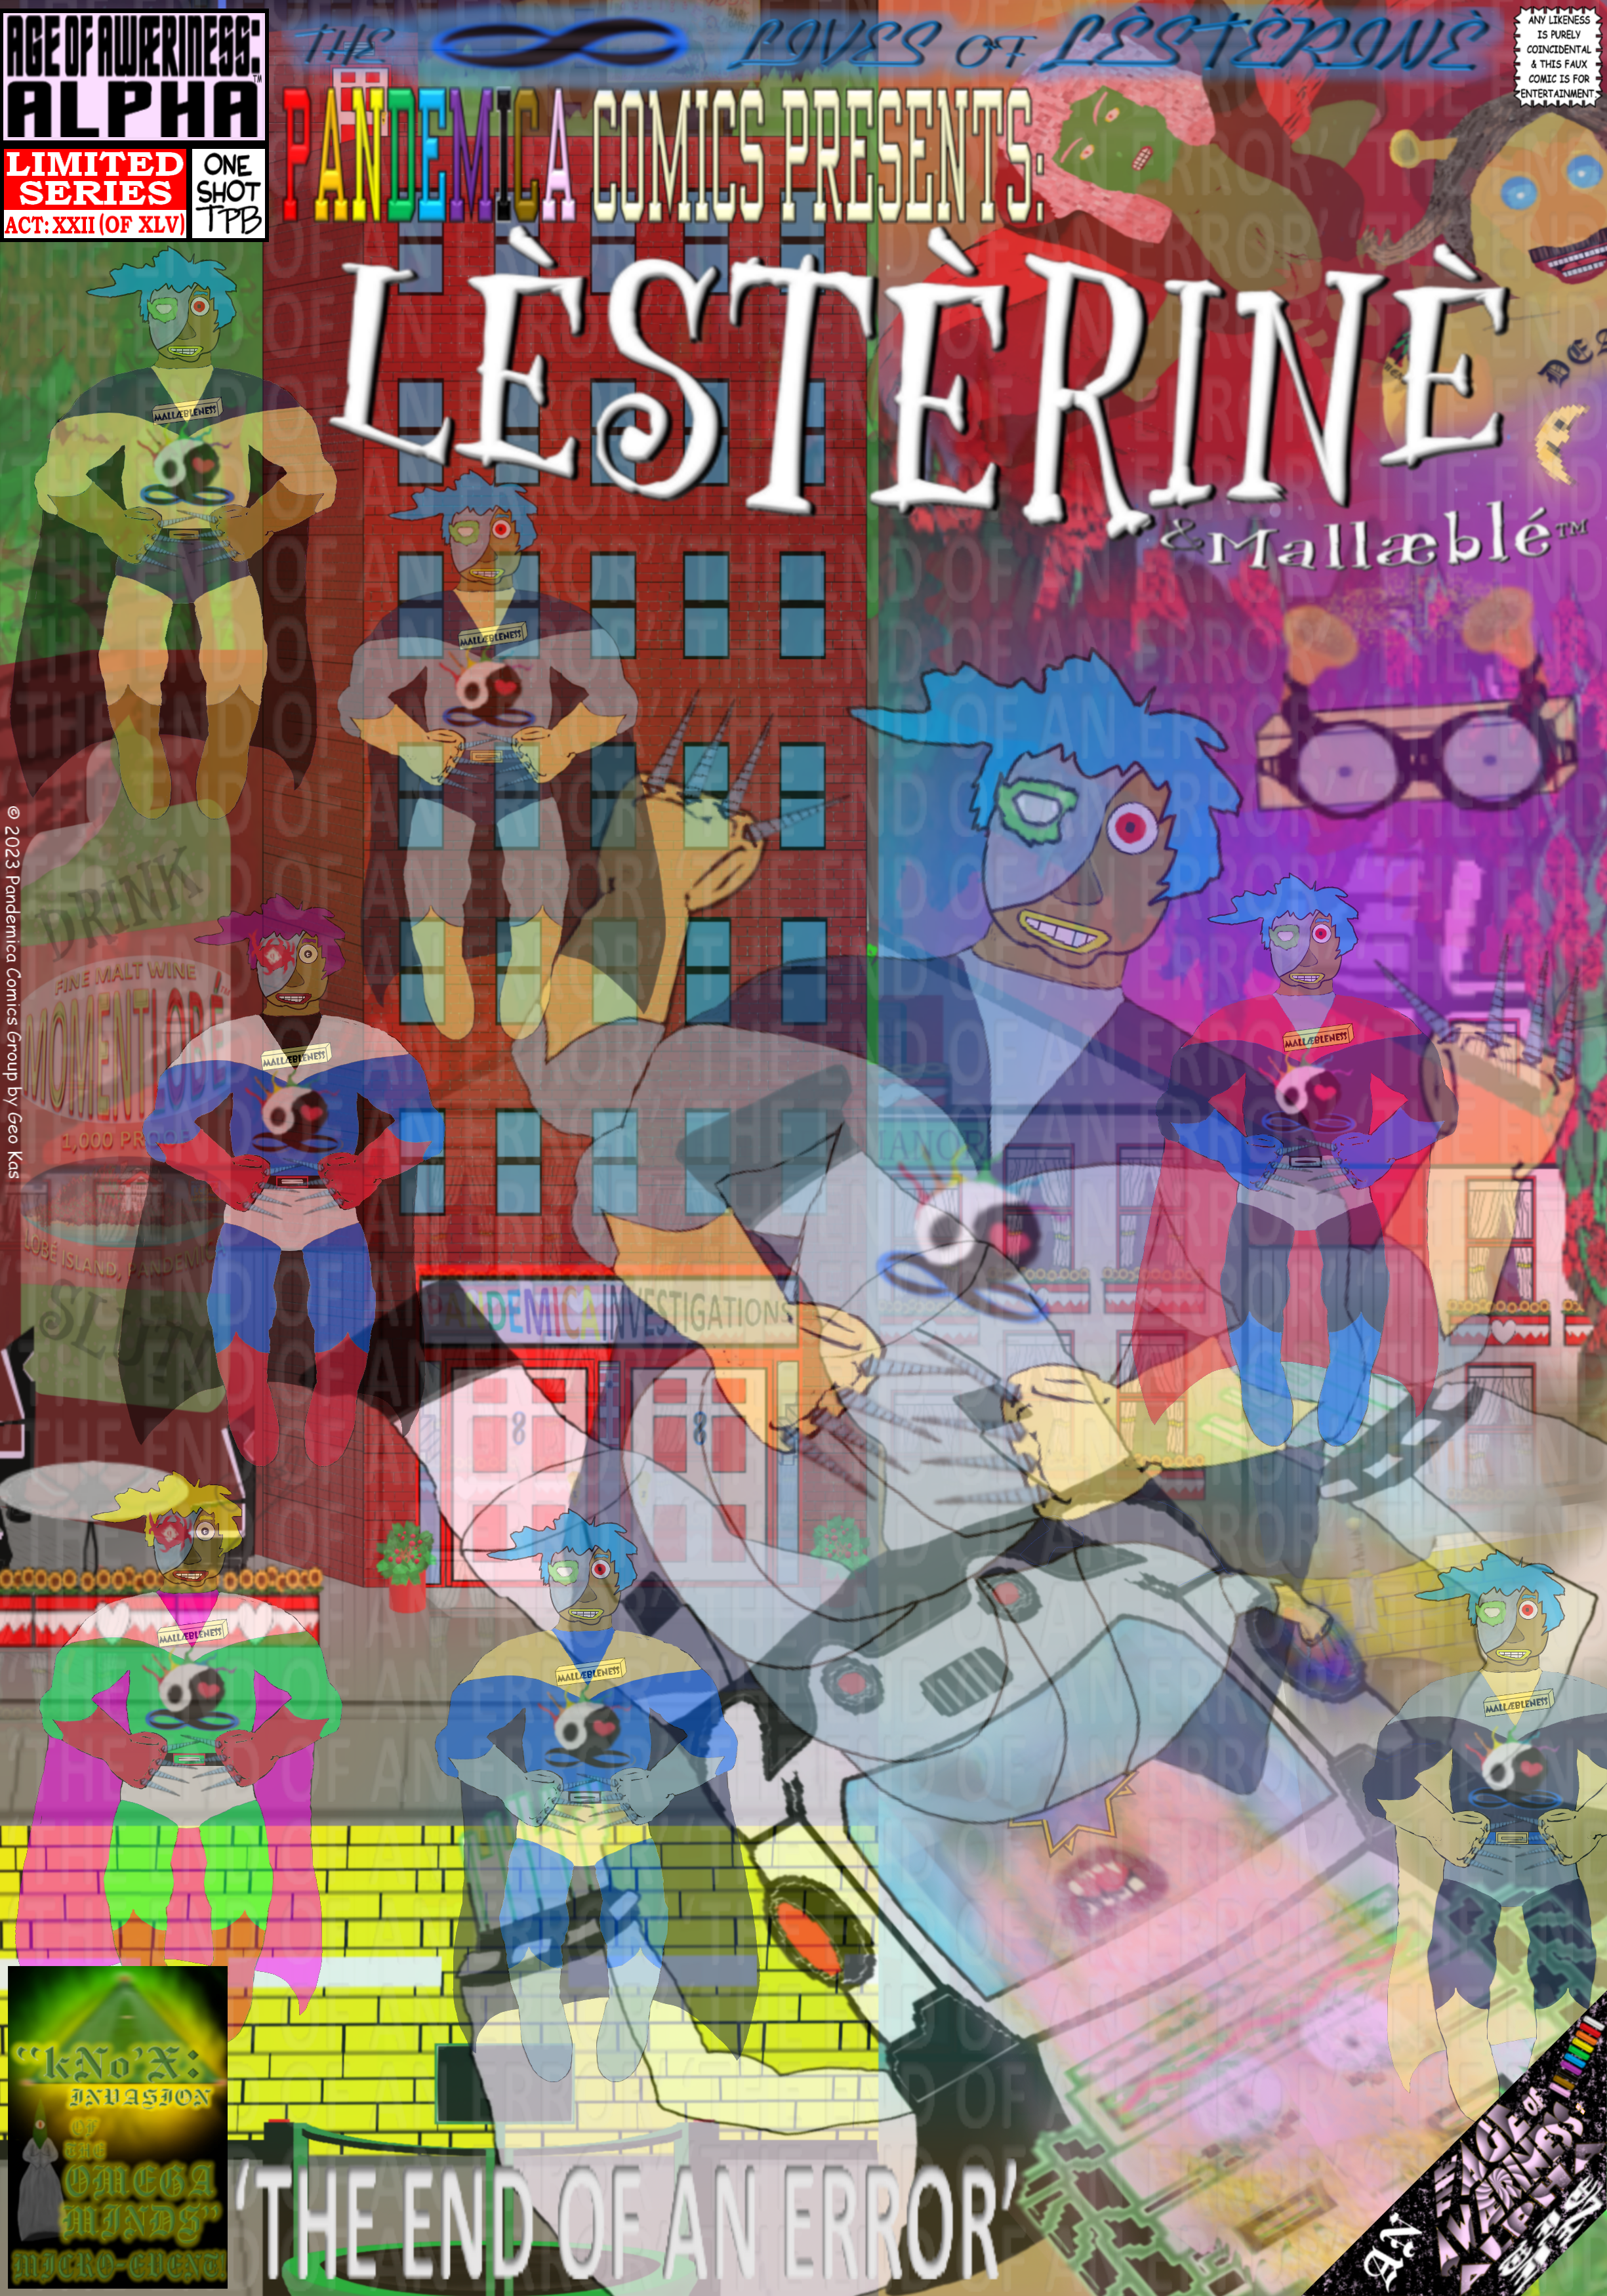 Pandemica Comics Presents: Léstériné